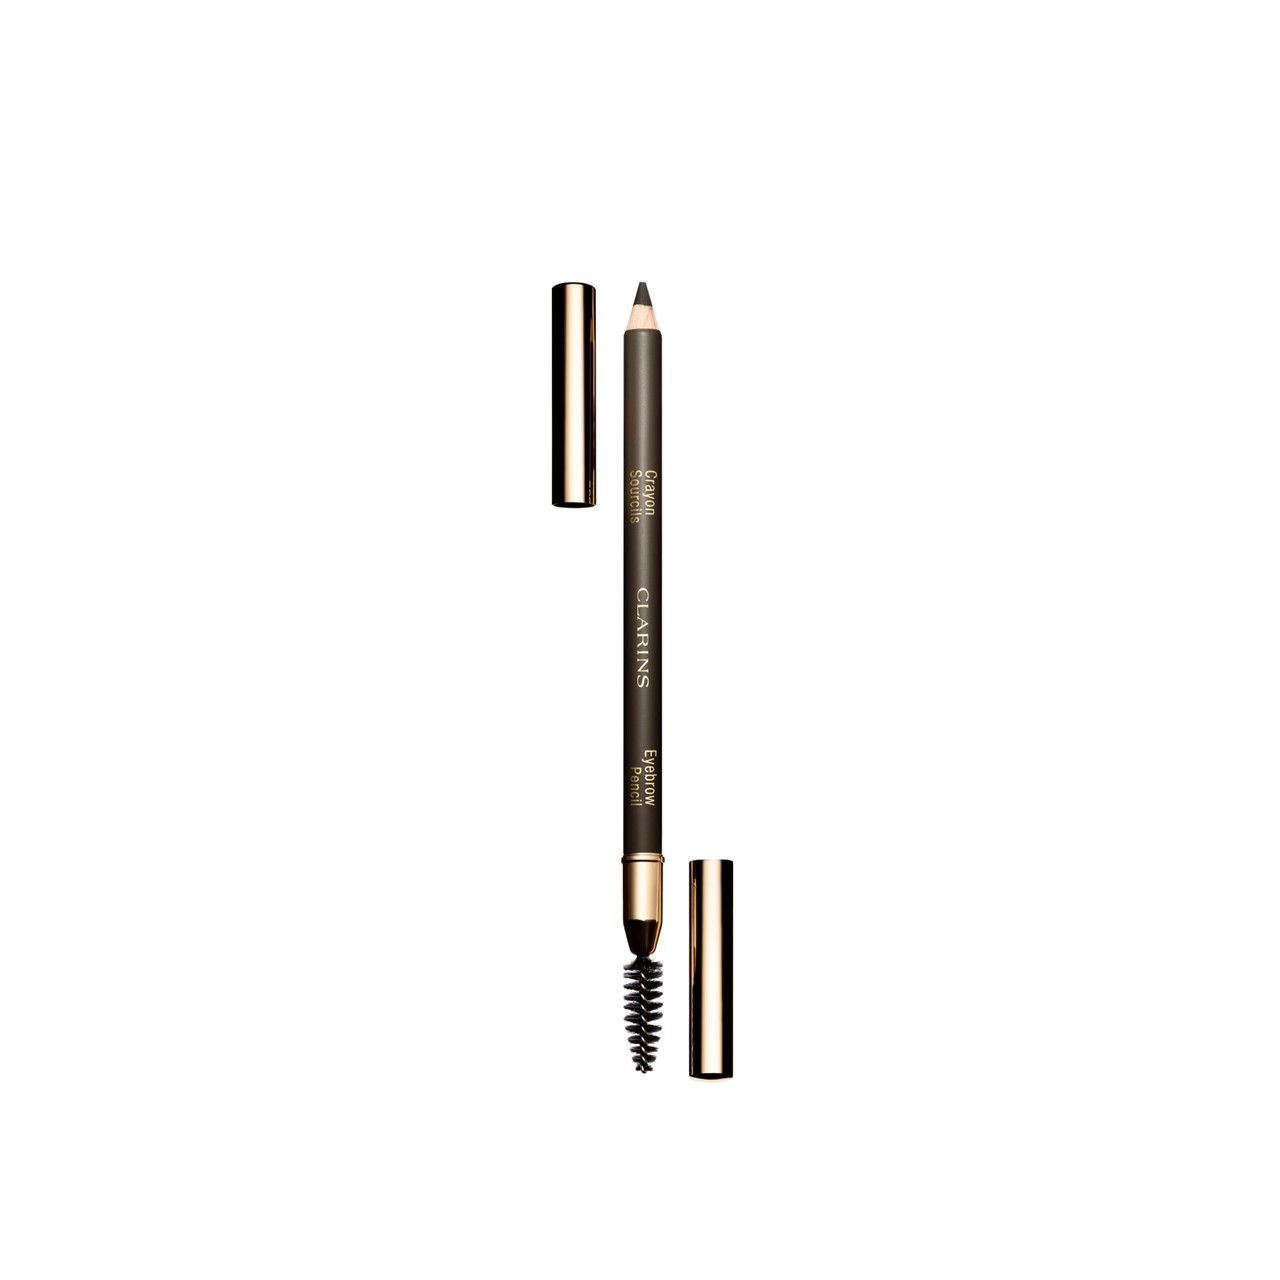 Clarins Eyebrow Pencil Long-Wearing 01 Dark Brown 1.1g (0.04oz.)